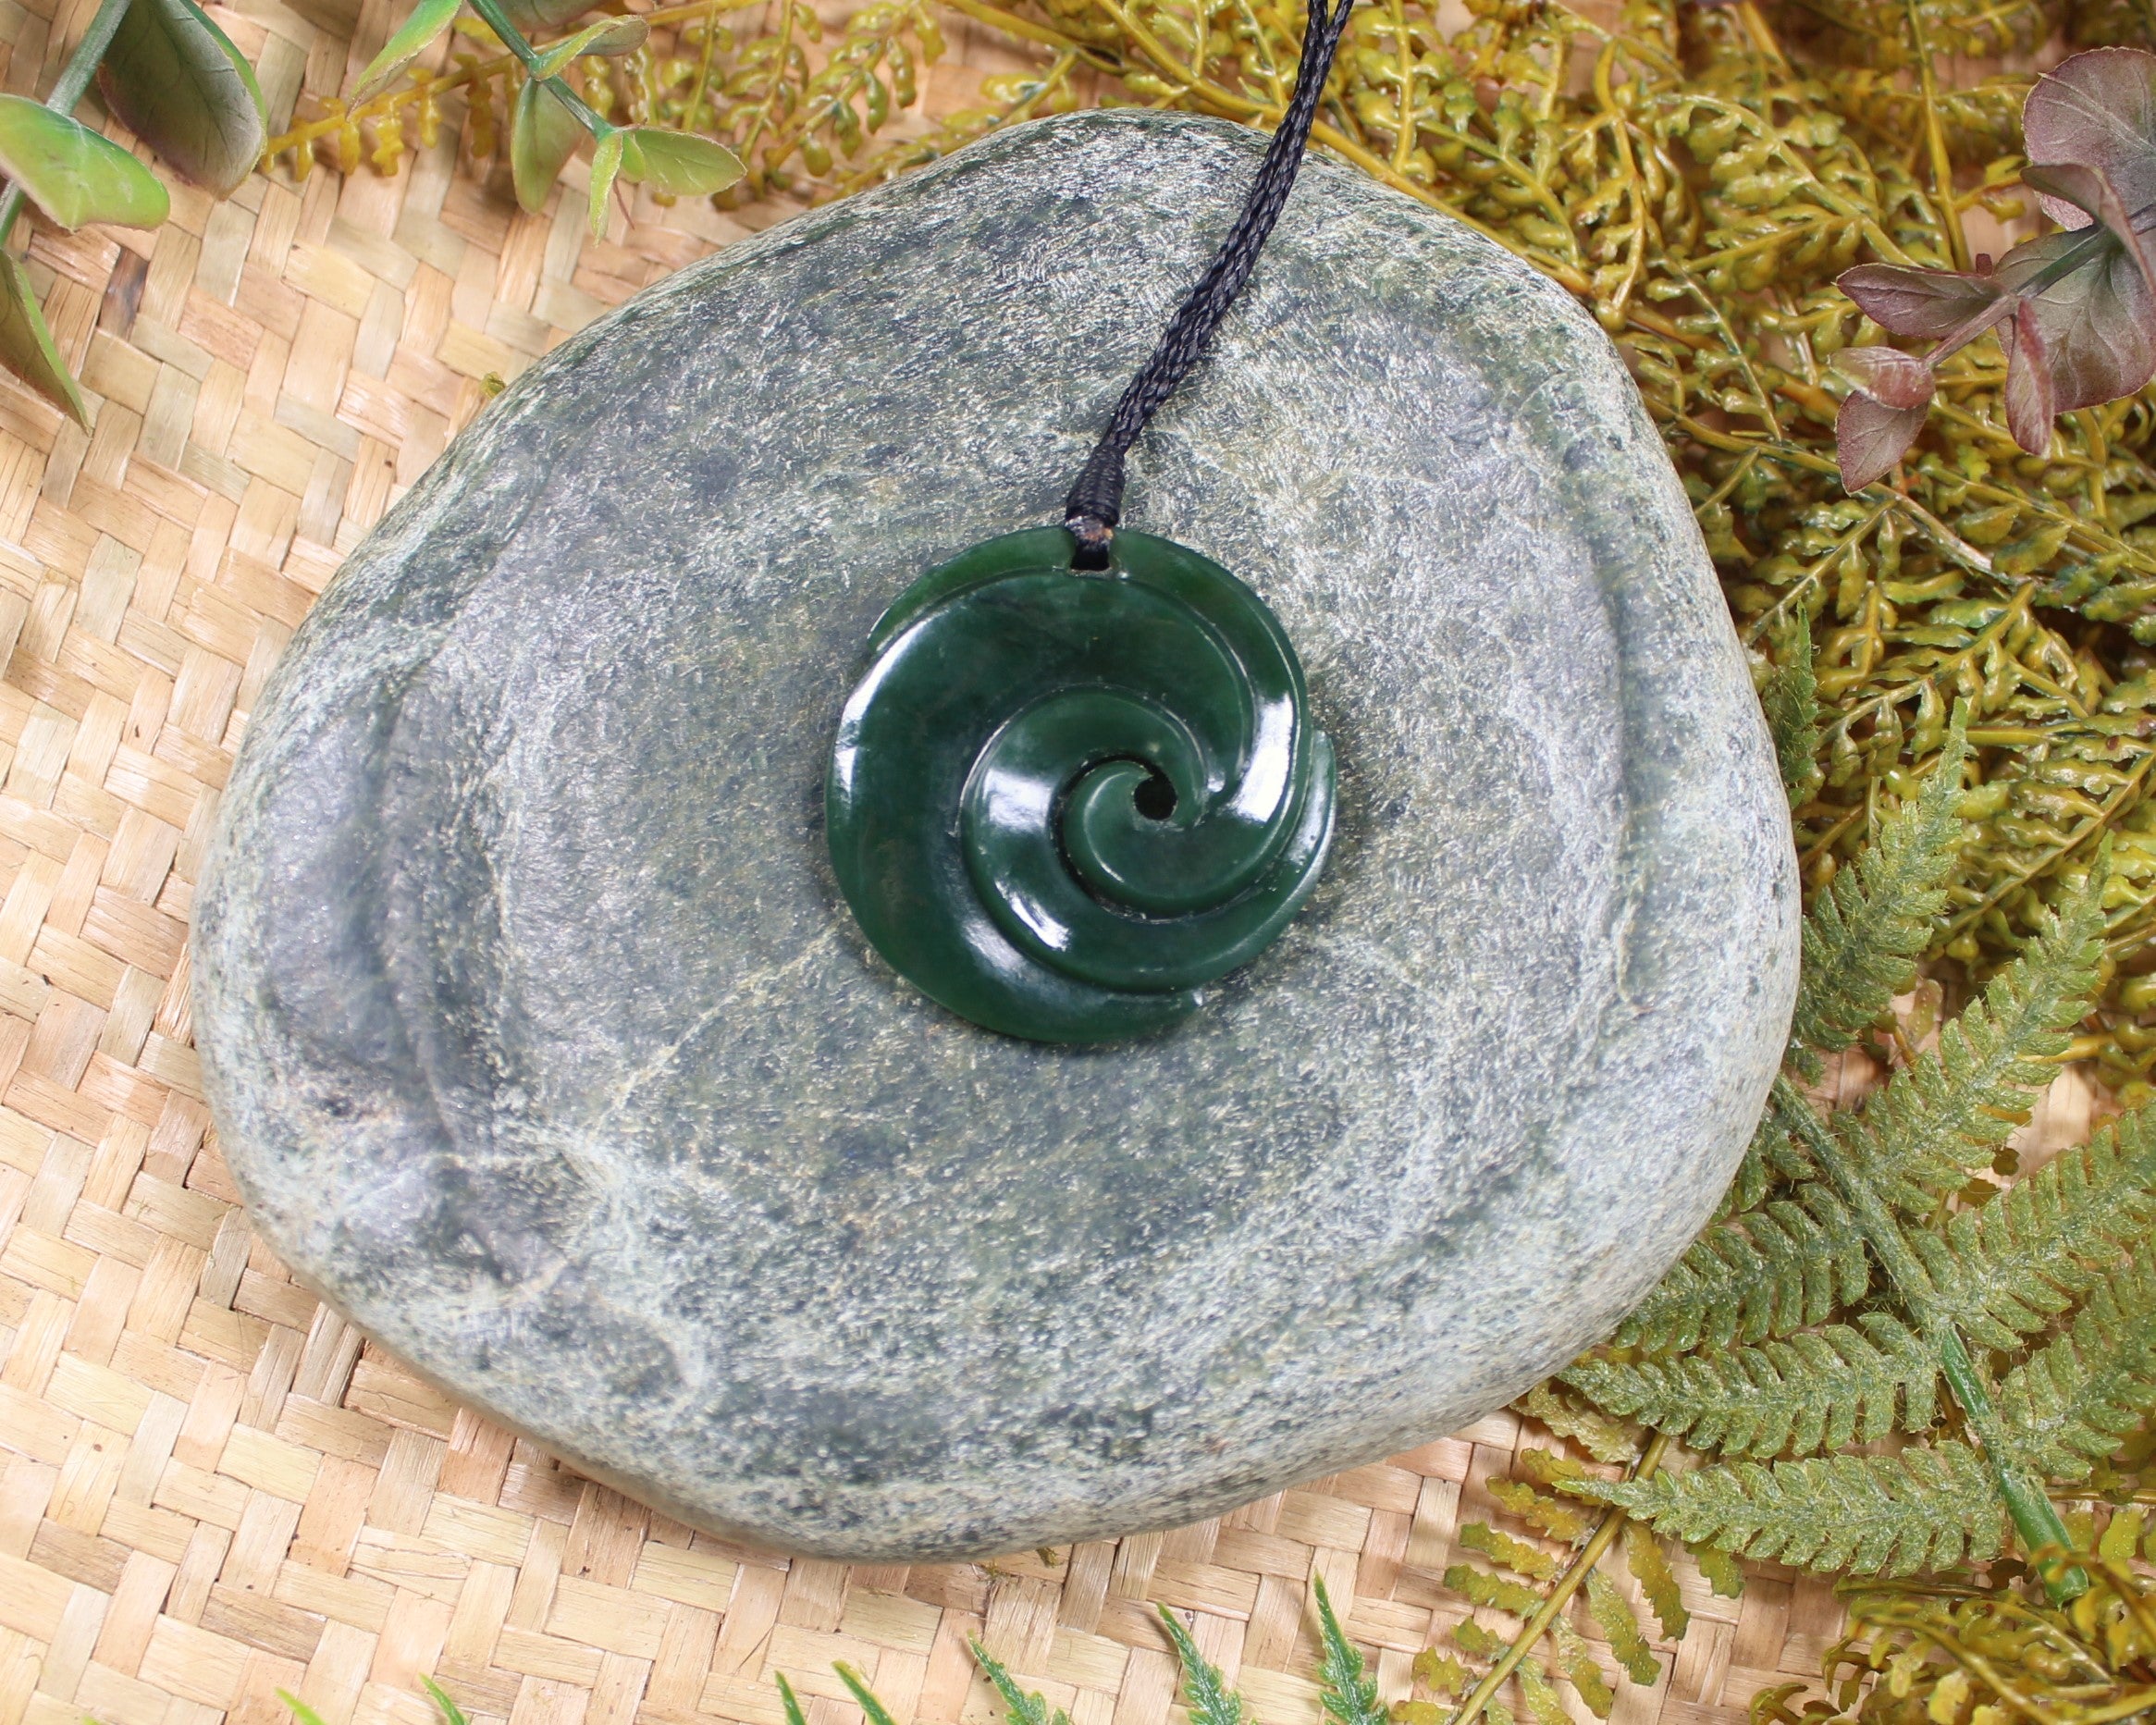 Koru or Spiral carved from Kawakawa Pounamu - NZ Greenstone